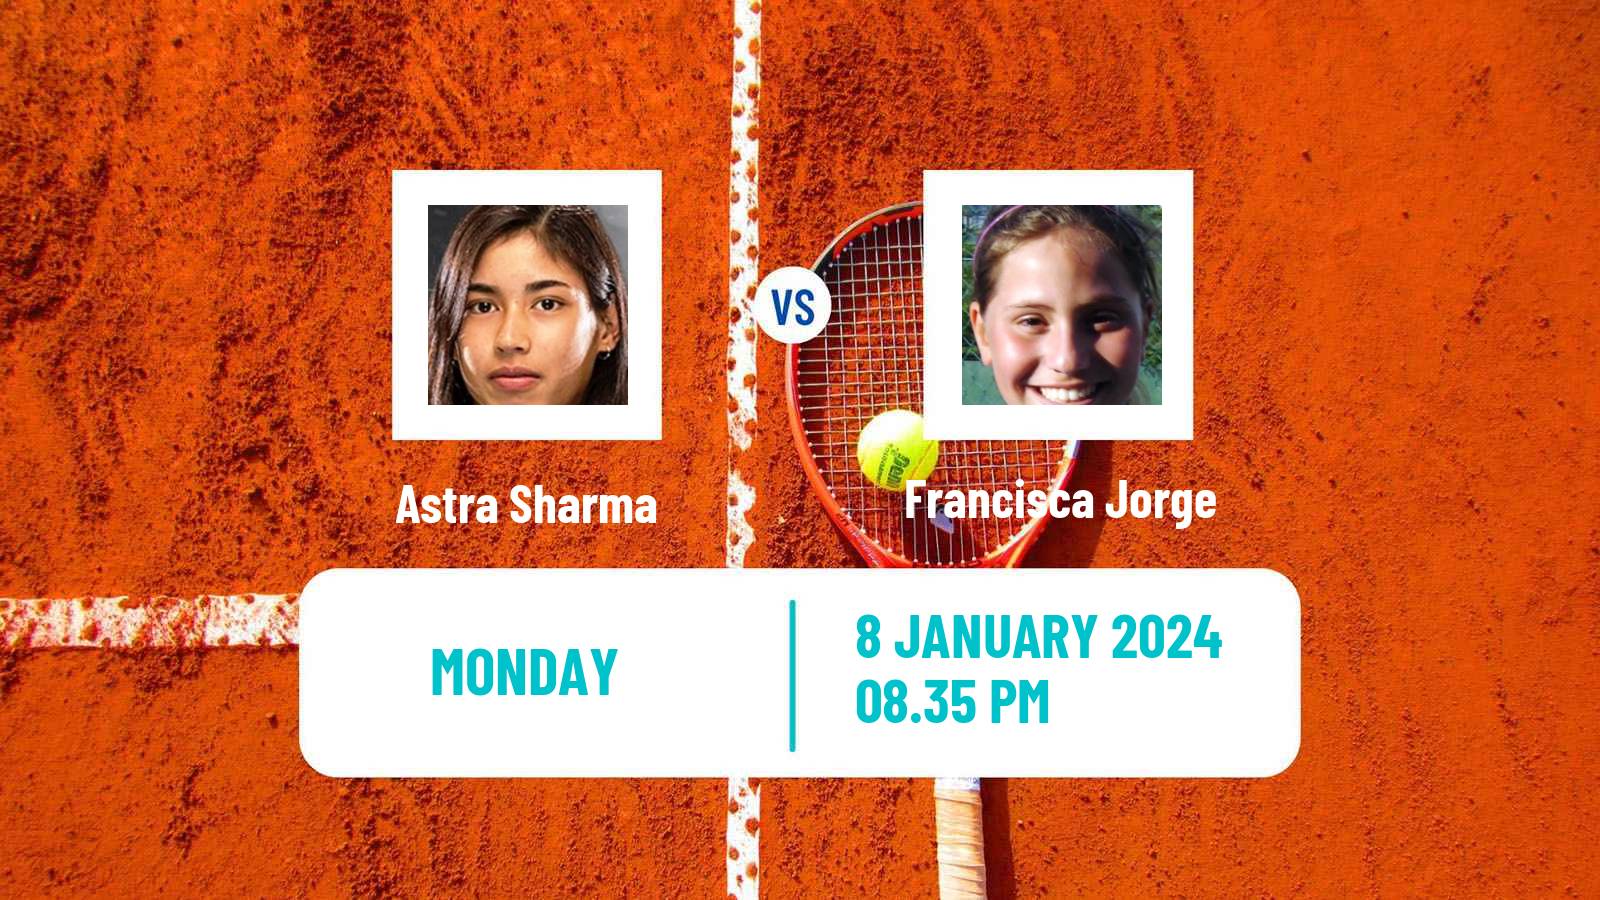 Tennis WTA Australian Open Astra Sharma - Francisca Jorge